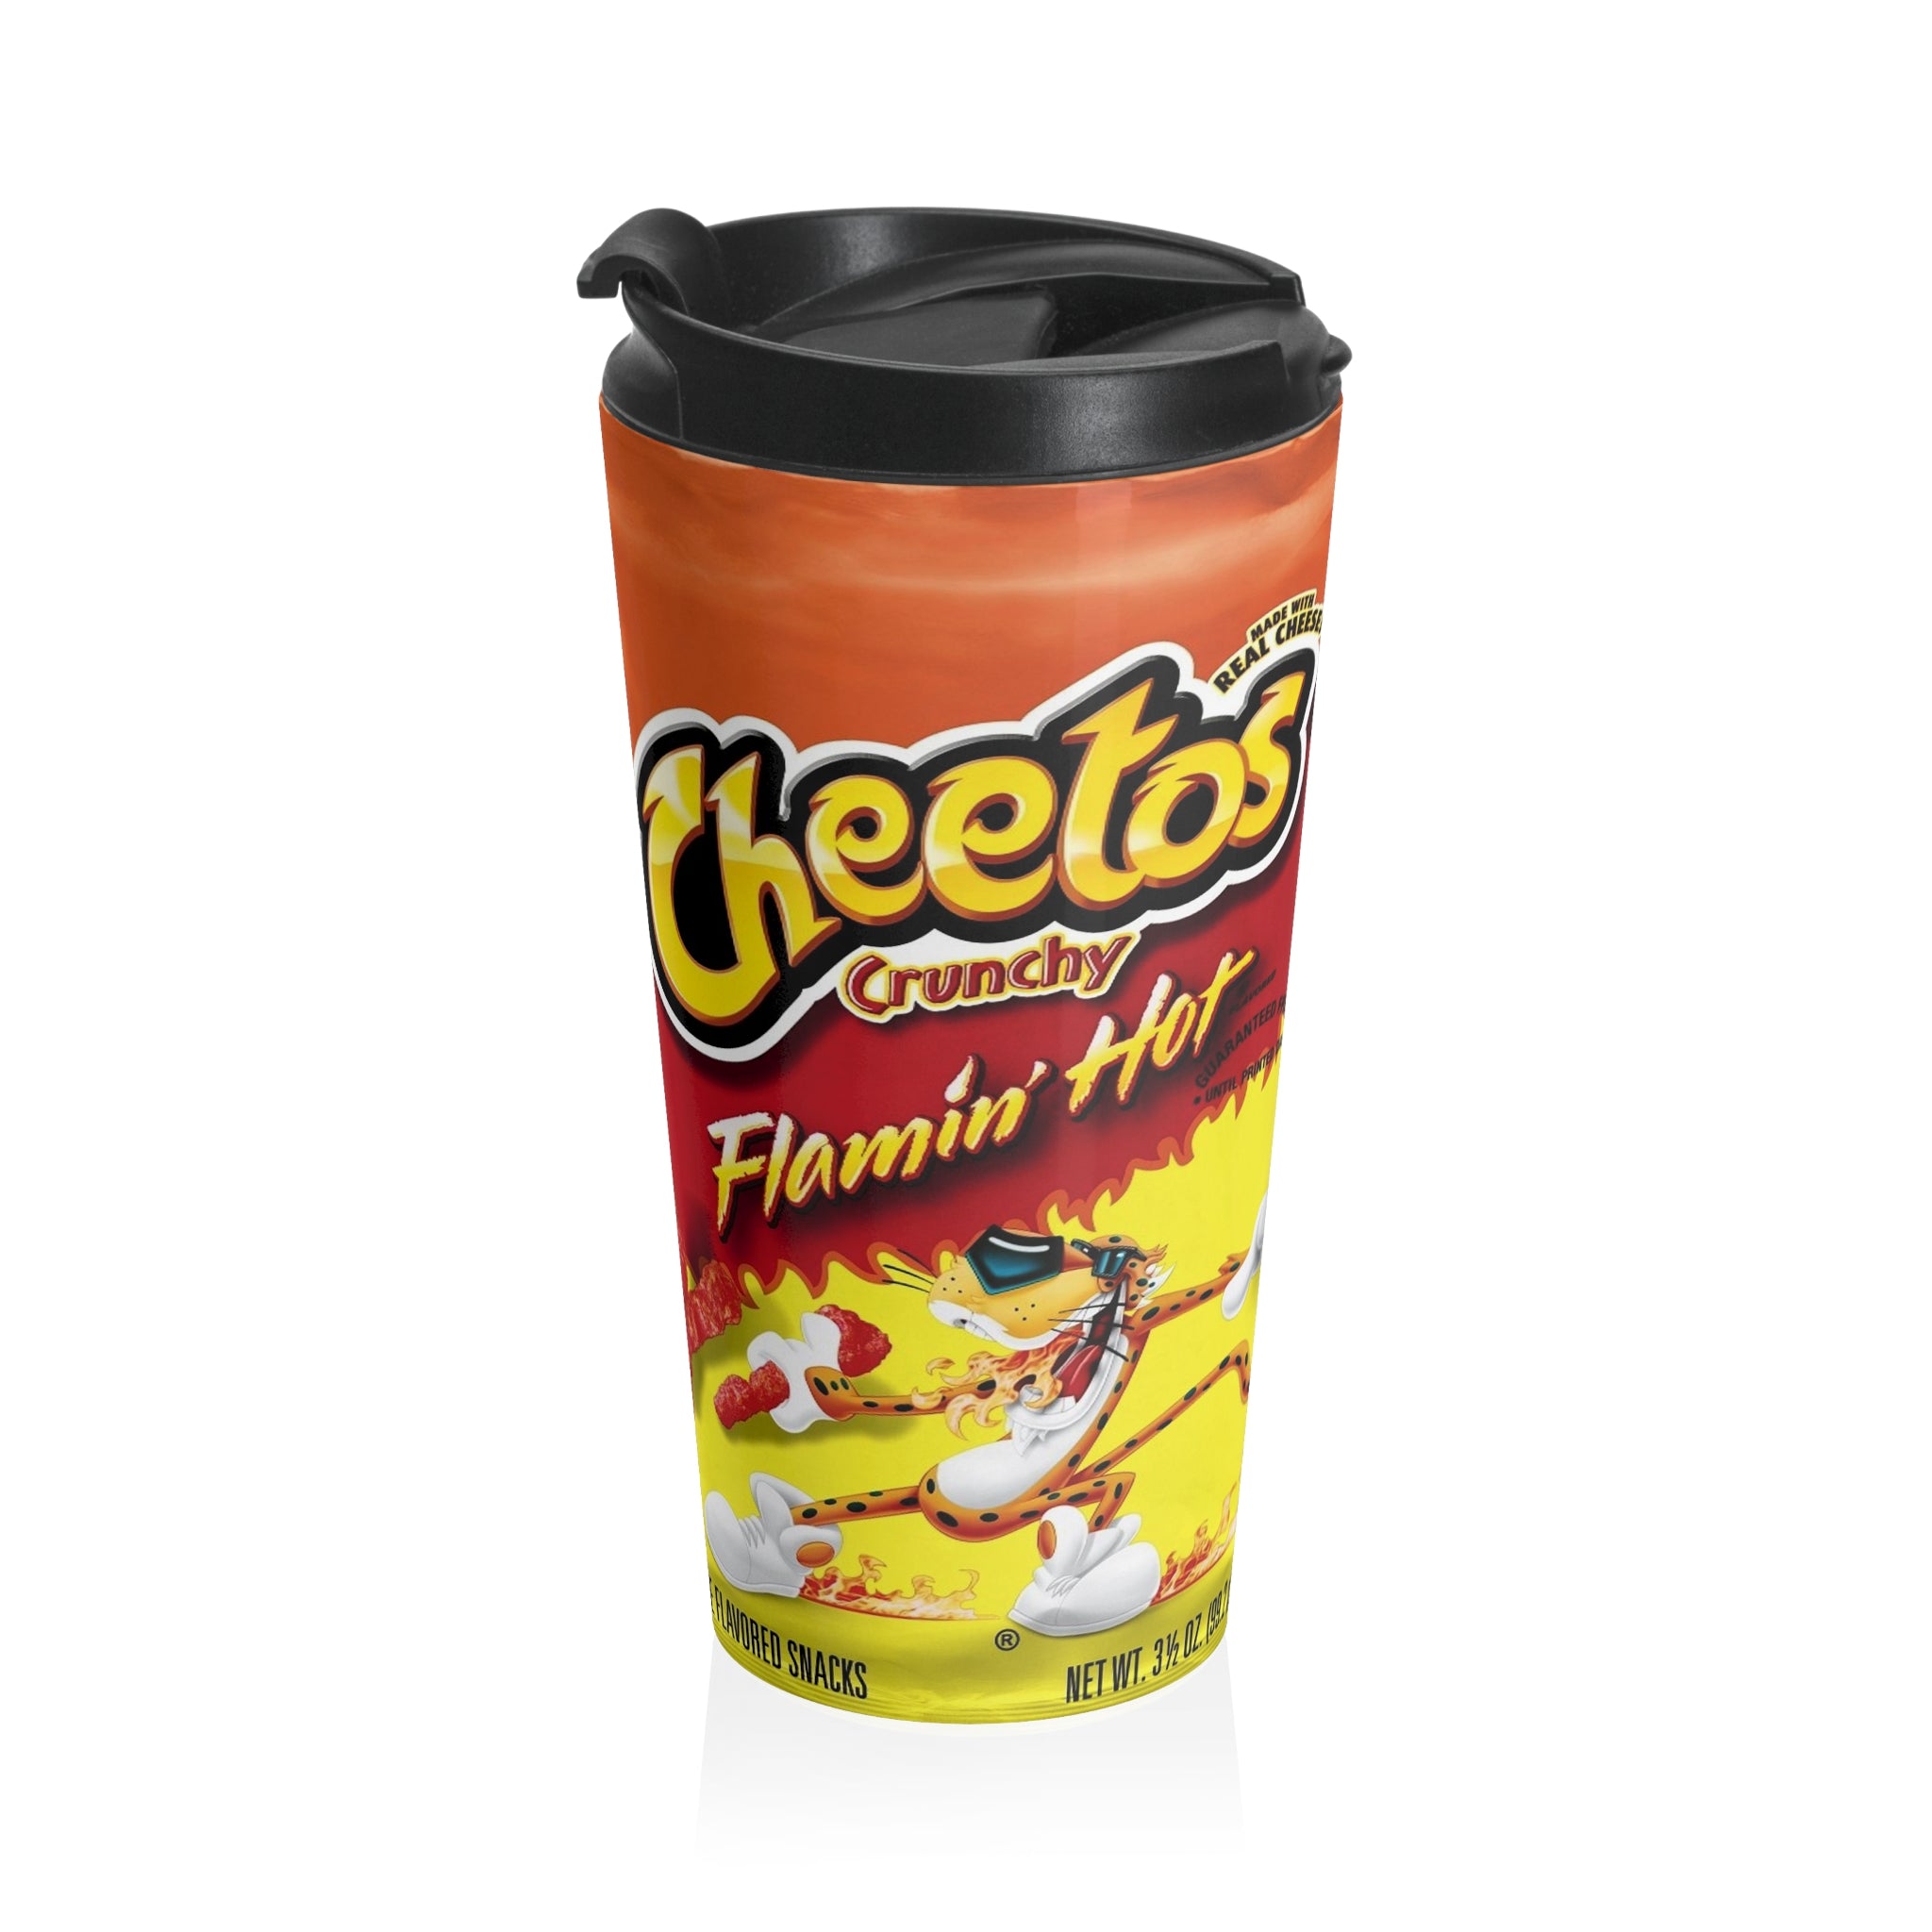 Cheetos Crunchy Flamin Hot Stainless Steel Travel Mug